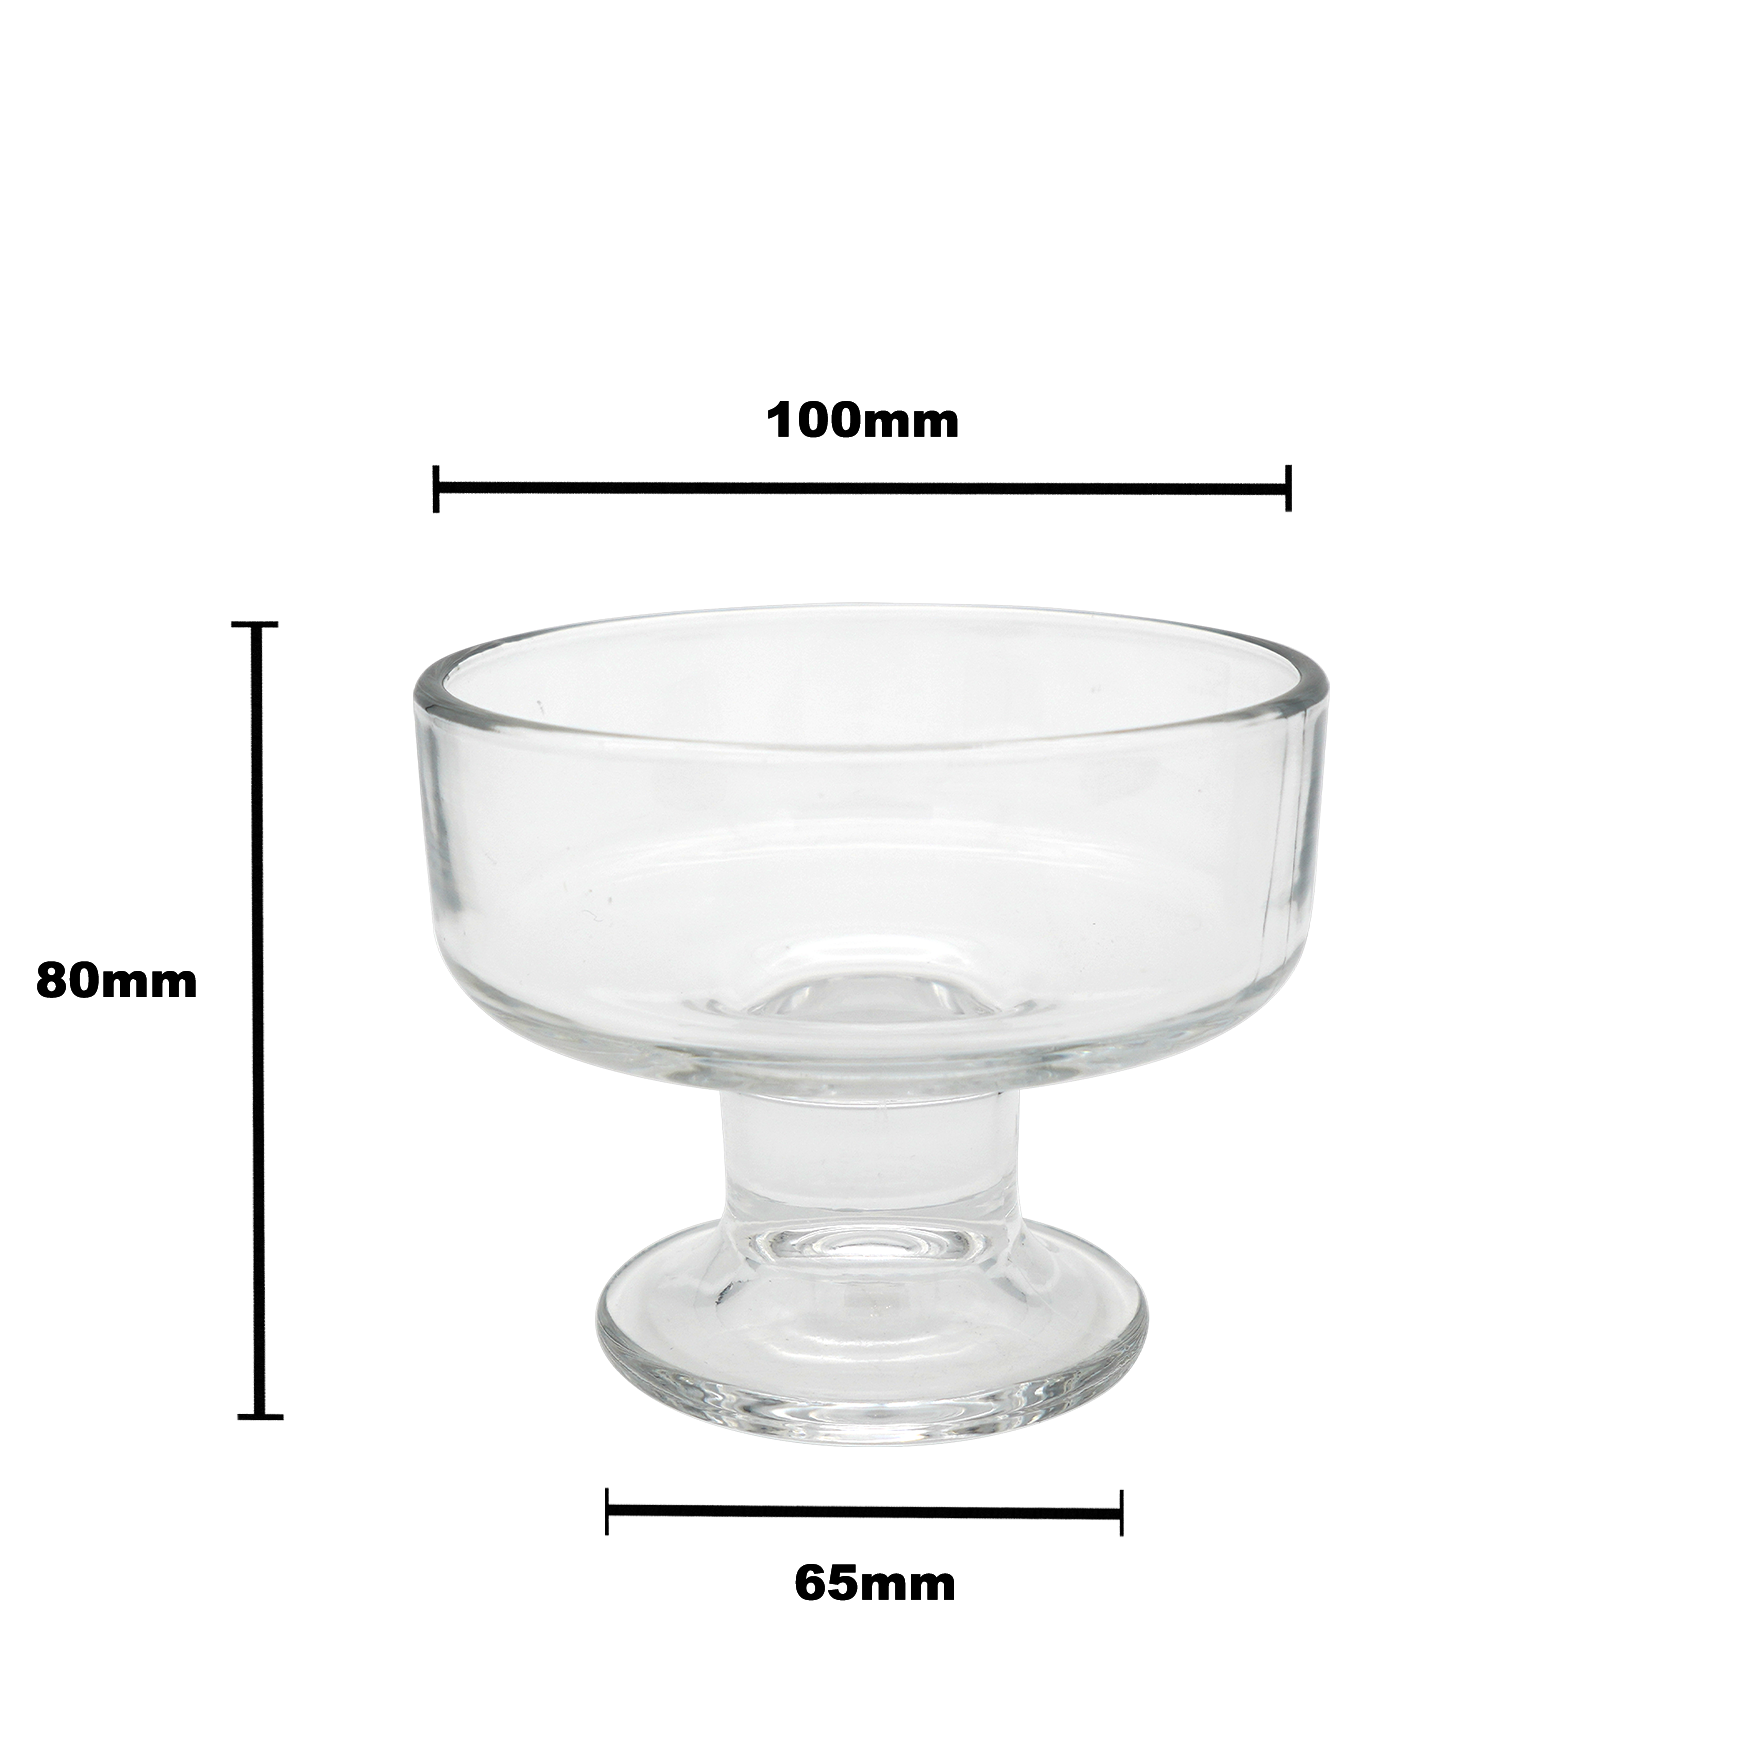 Authur Dessert Glass Bowl - 200ml clear